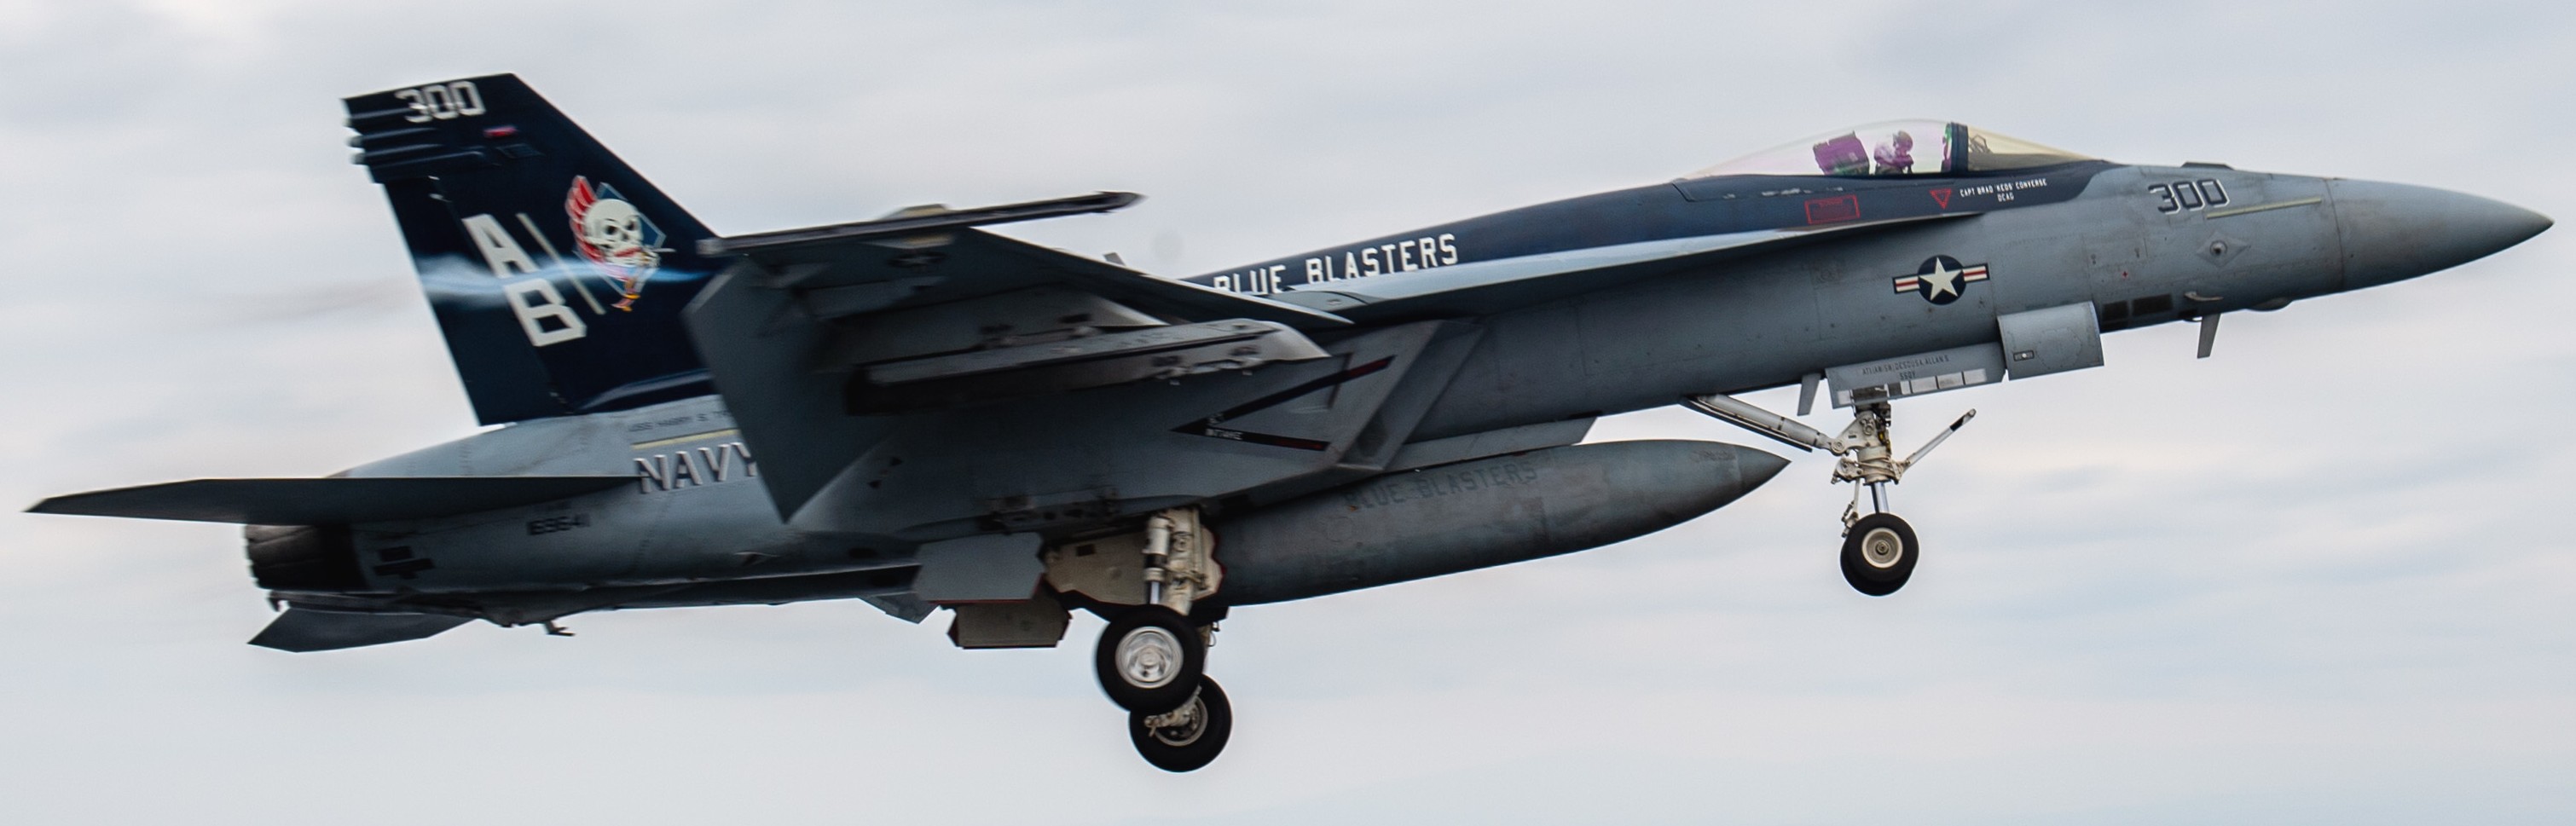 vfa-34 blue blasters strike fighter squadron f/a-18e super hornet cvn-75 uss harry s. truman cvw-8 us navy 92